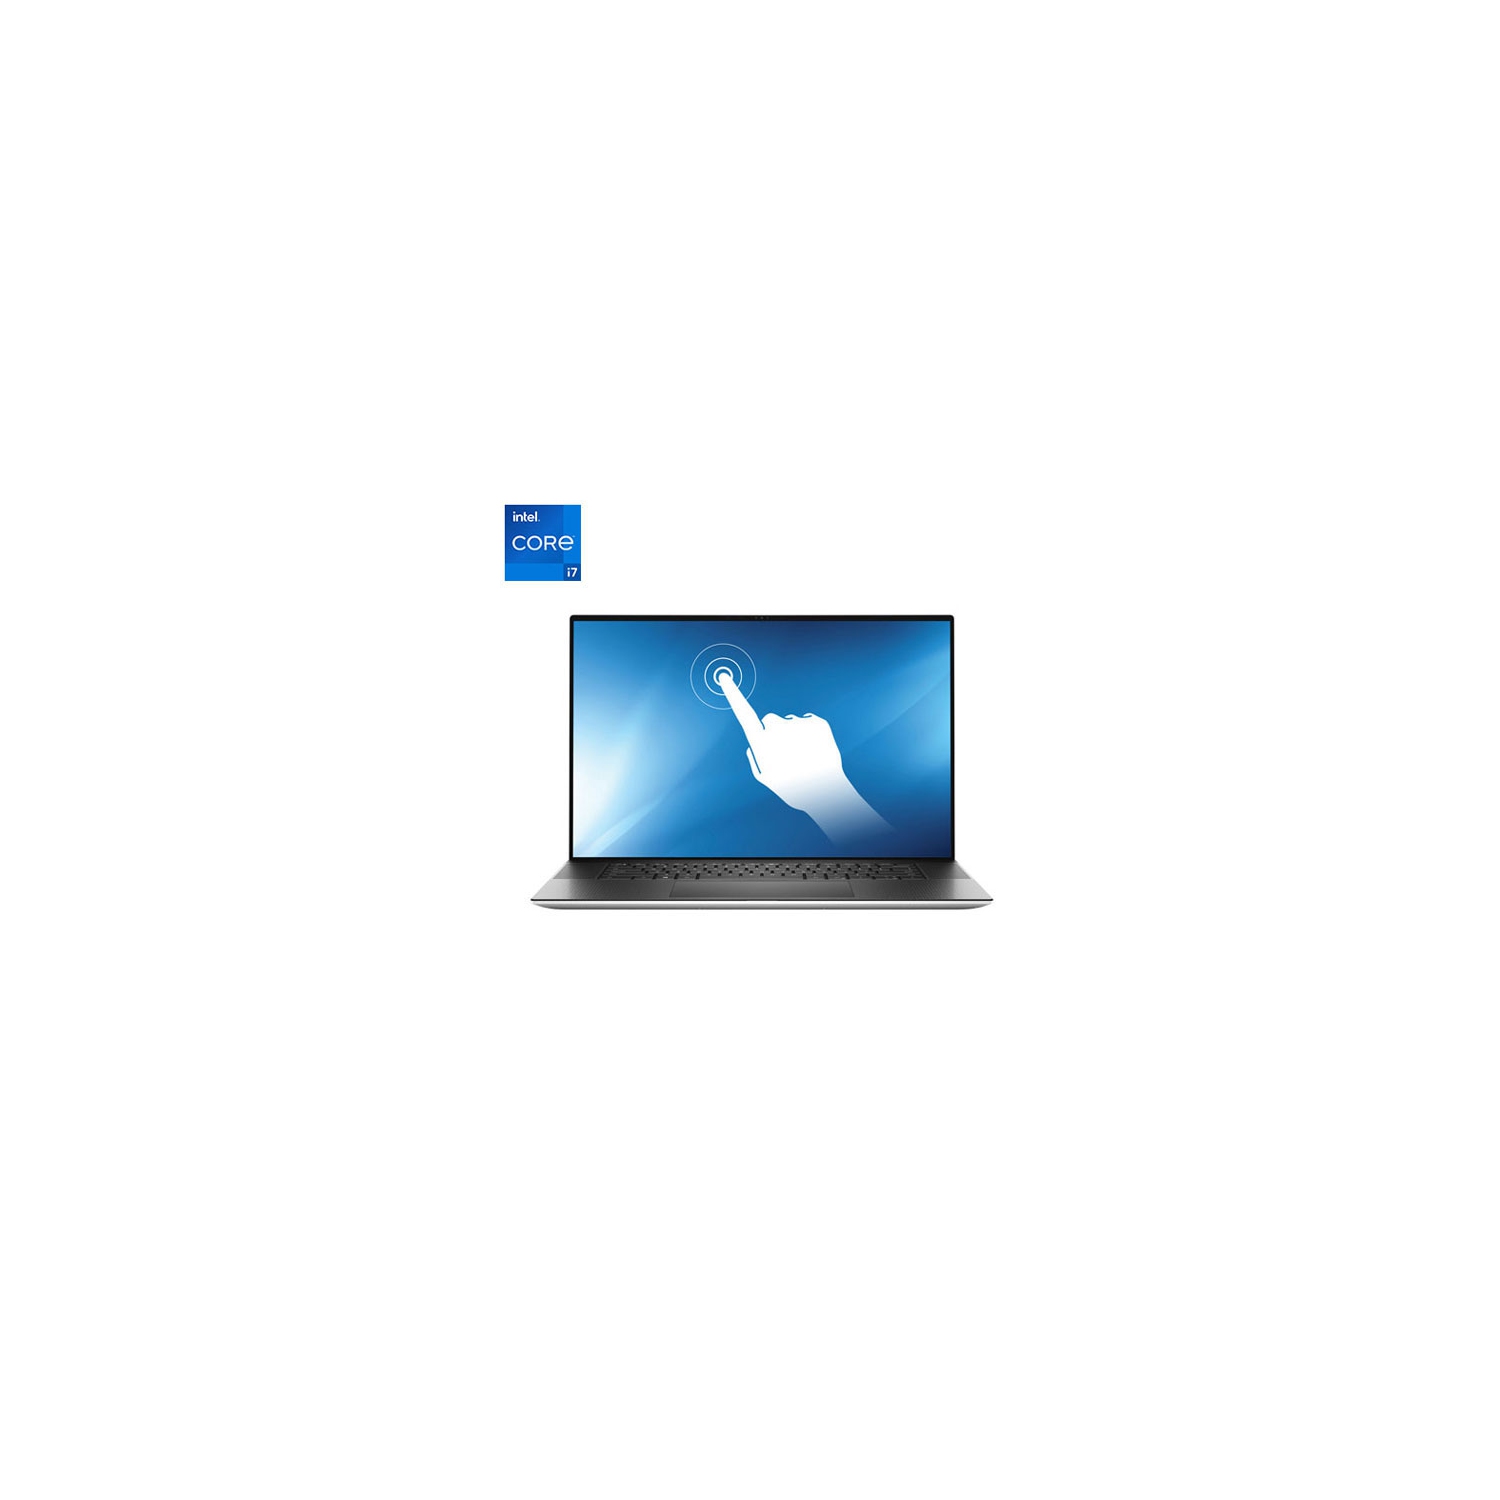 Dell XPS 17" Touchscreen Laptop - Silver (Intel Core i7-11800H/1TB SSD/16GB RAM/Windows 10) - English - Open Box